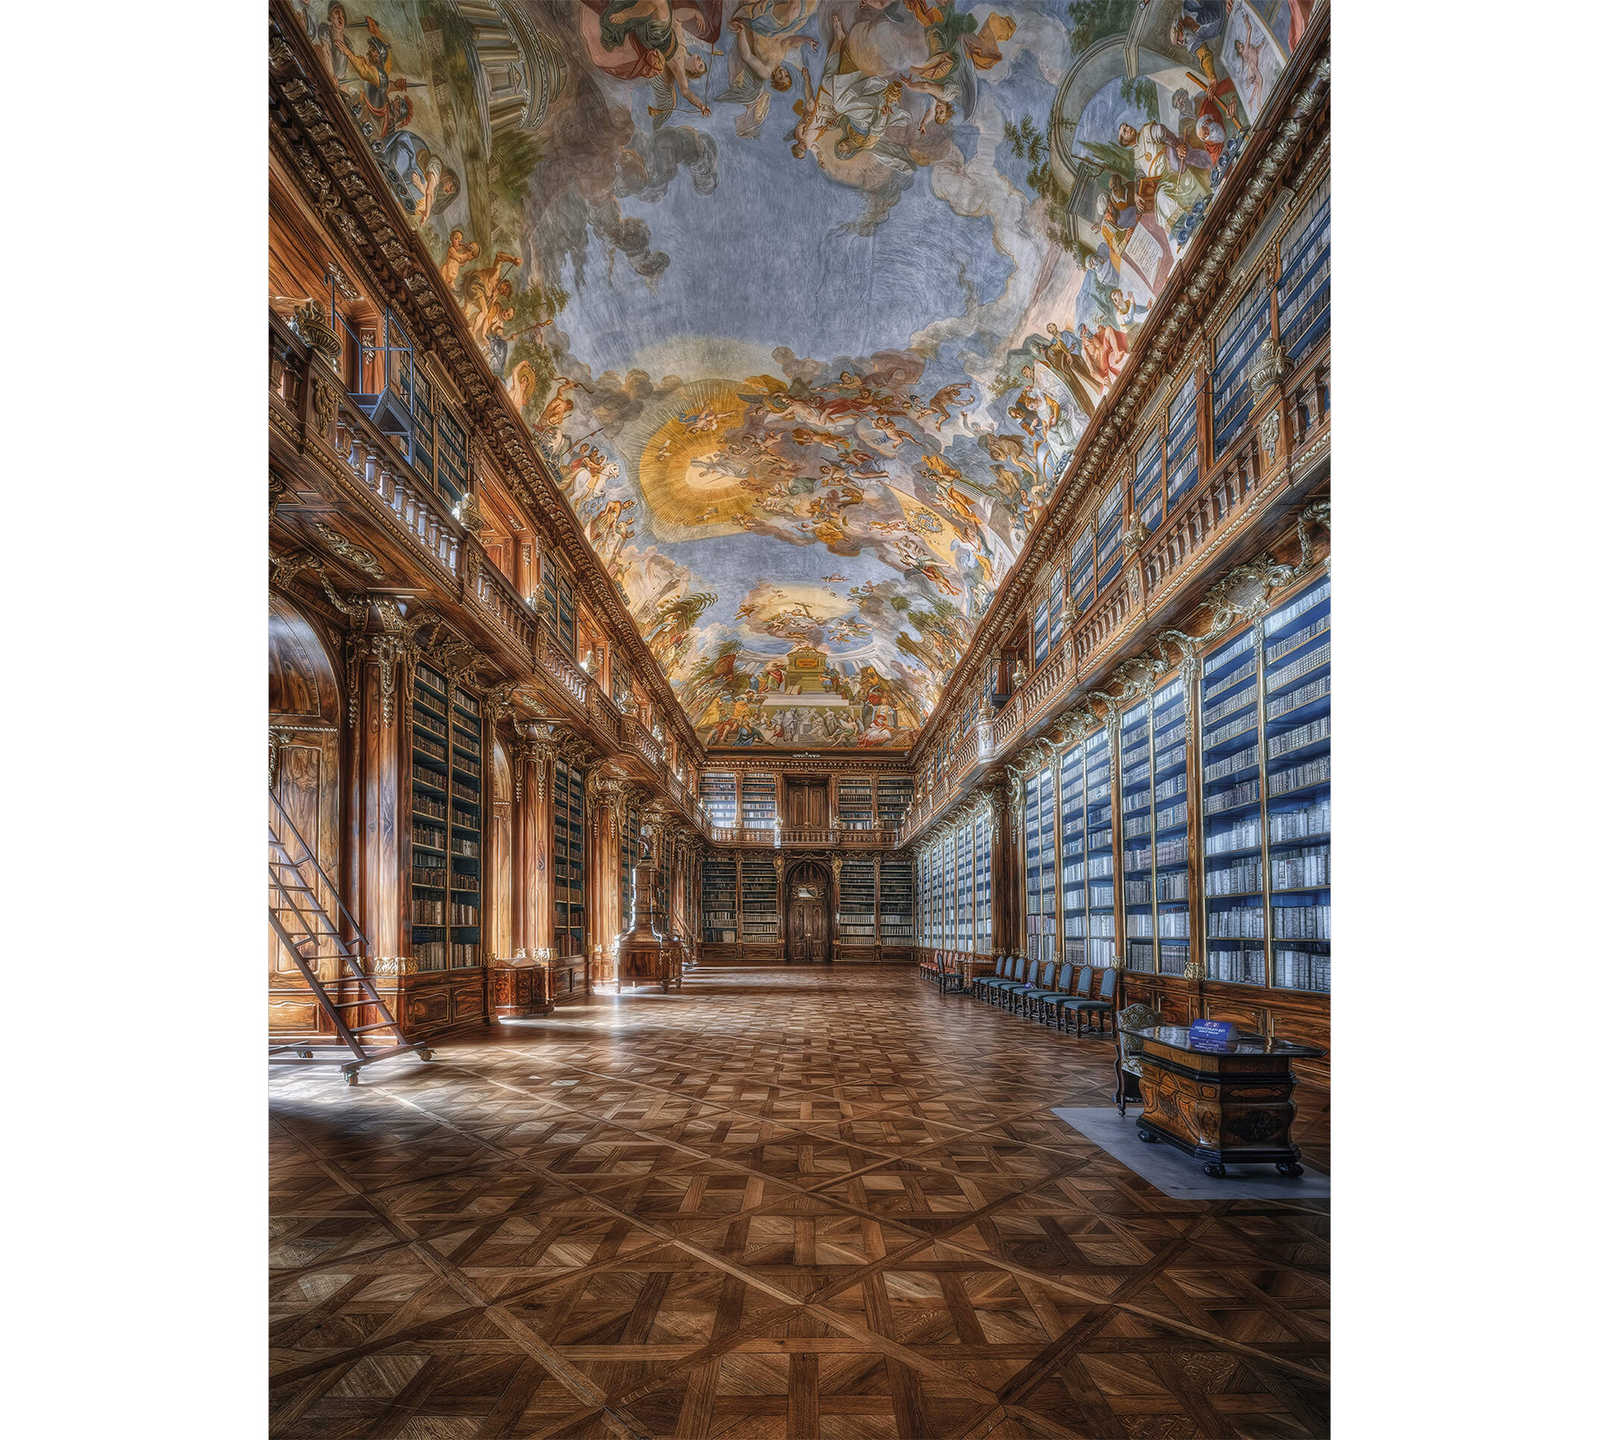 Fototapete Bibliothek Renaissance Architektur
